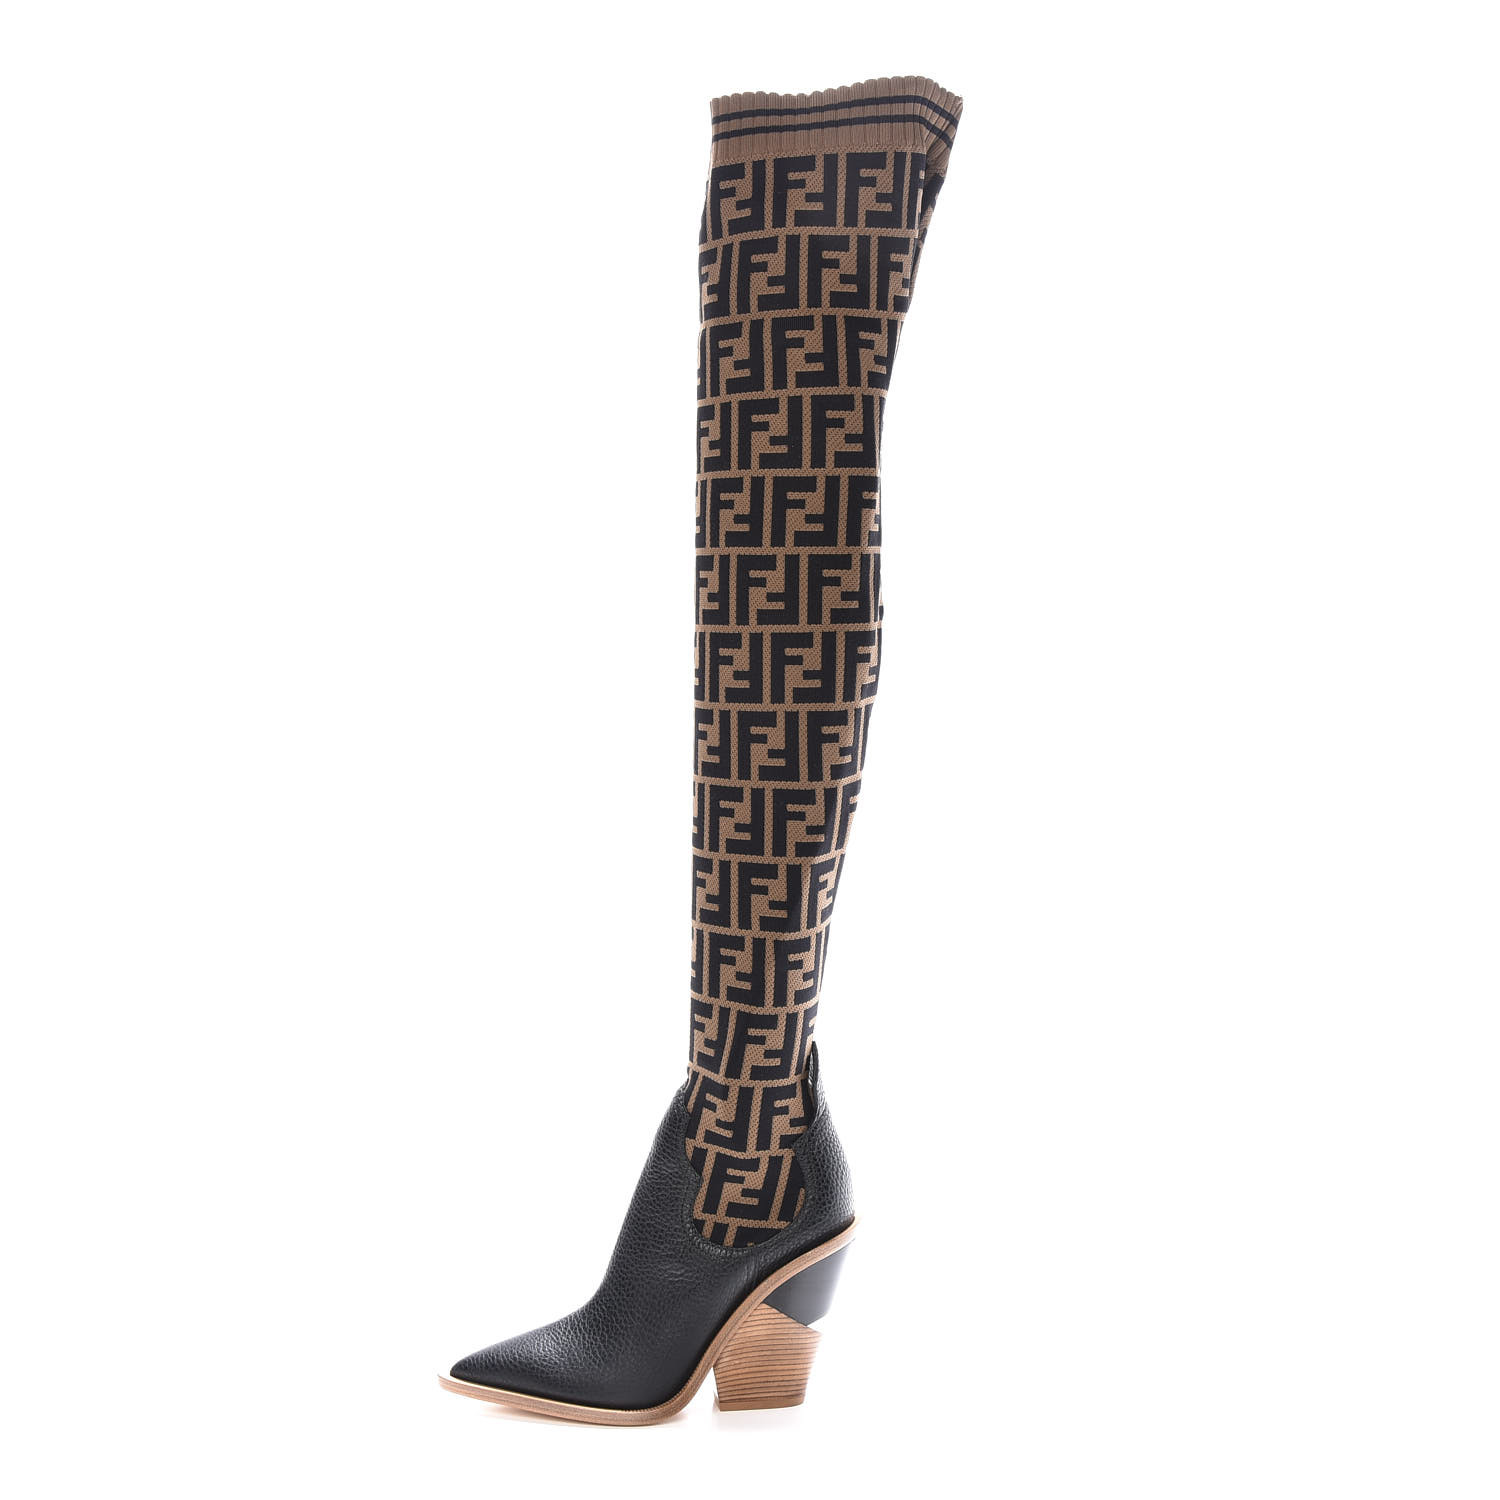 FENDI Stretch Fabric Zucca Thigh High Sock Boots 36 Tobacco Black 399814